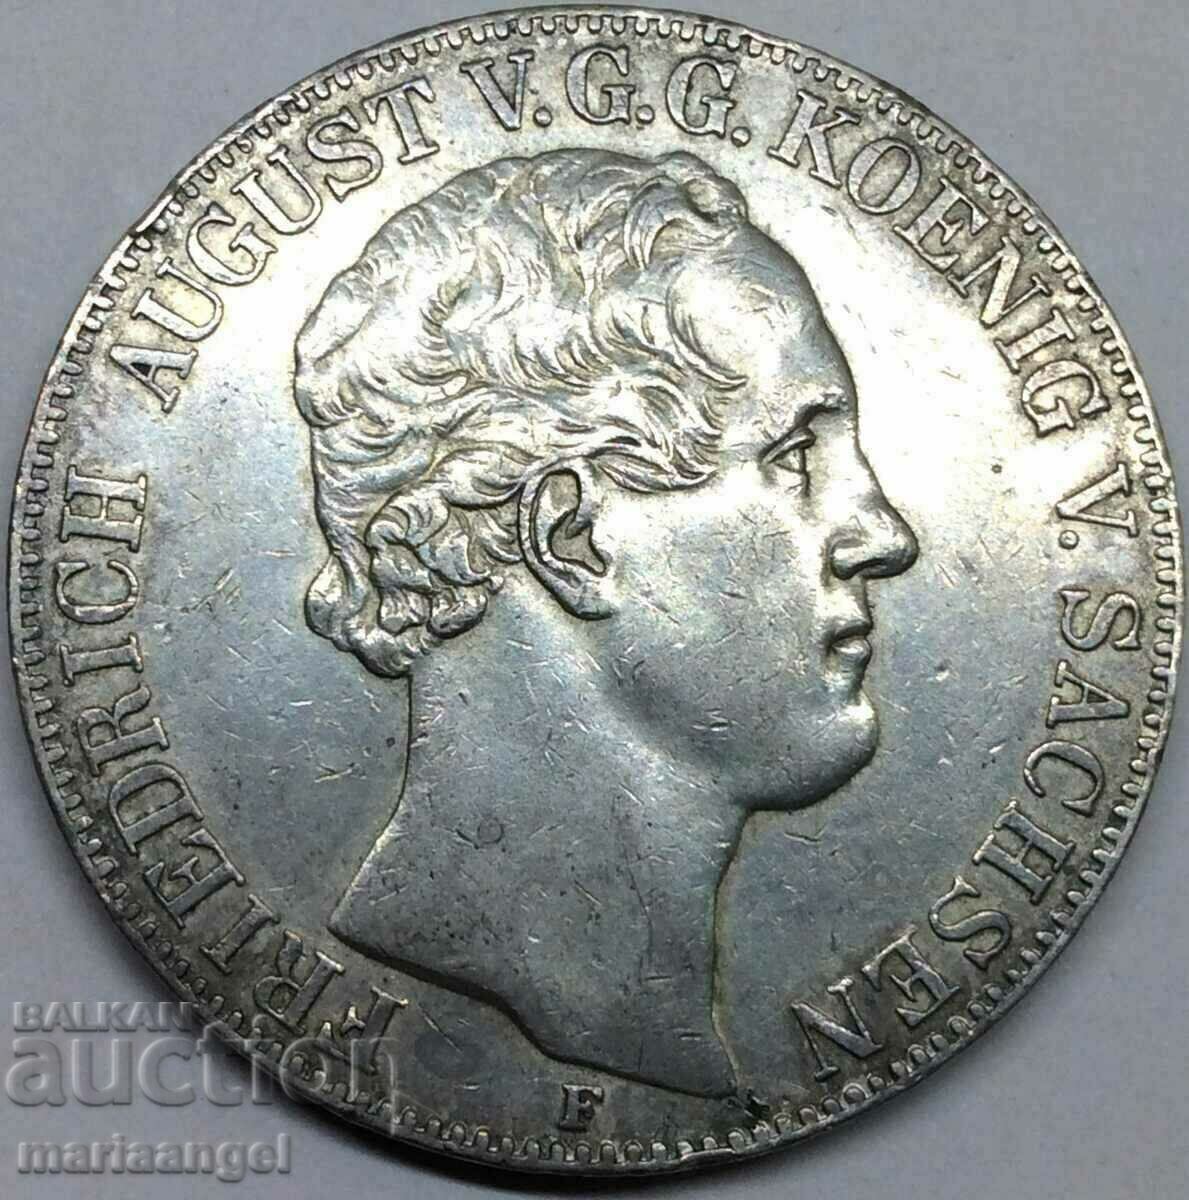 Double Thaler 1854 (36.97g) Germany Saxony-Albertine silver